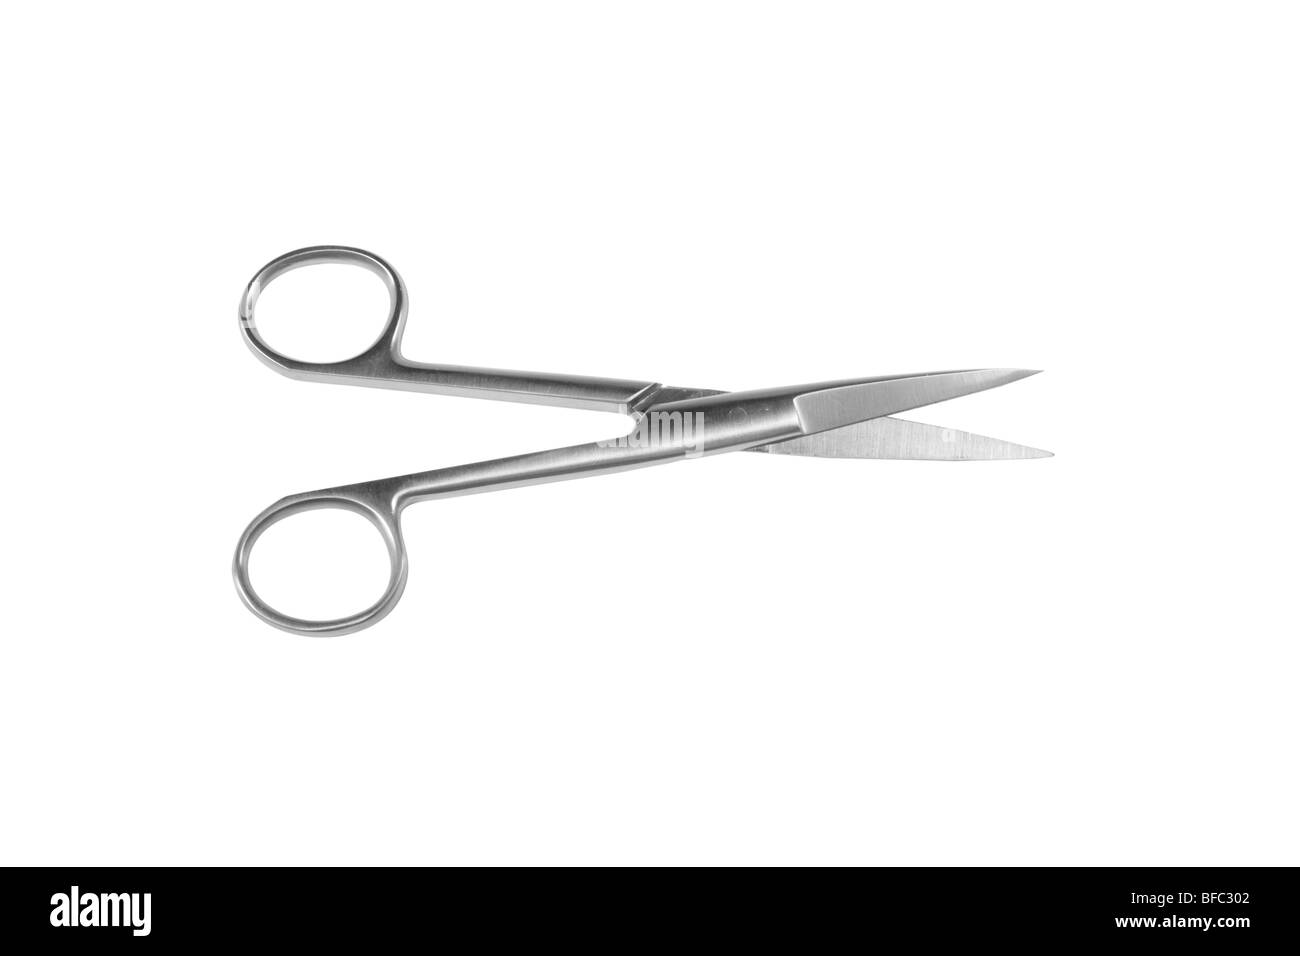 https://c8.alamy.com/comp/BFC302/dissecting-scissors-BFC302.jpg